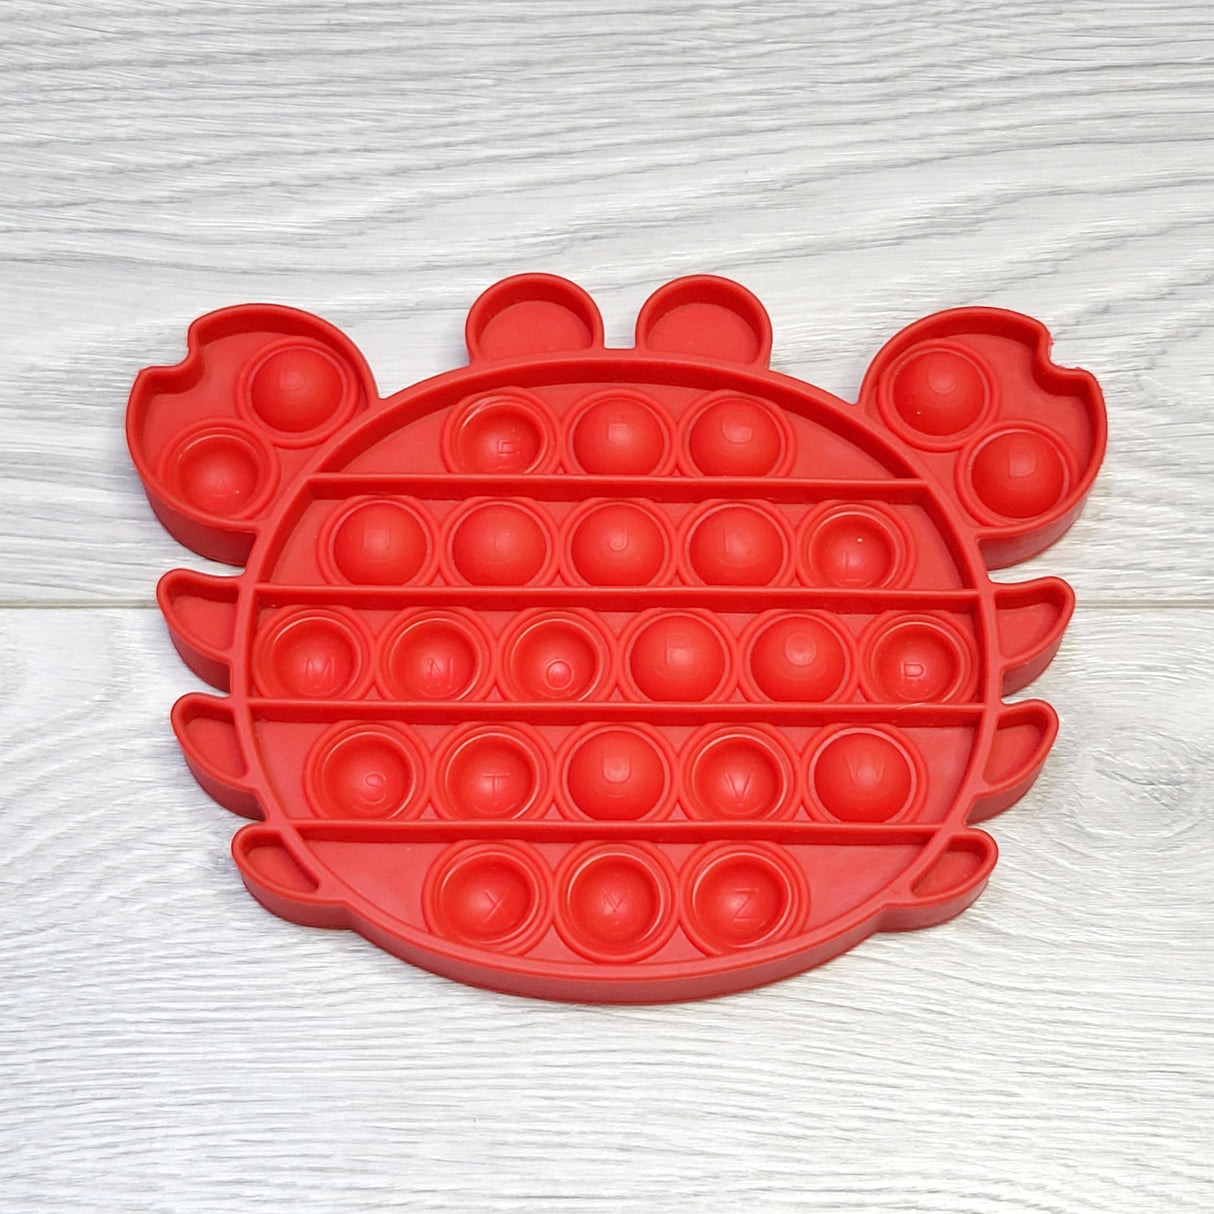 KSAL3 - Crab shape pop it fidget toy